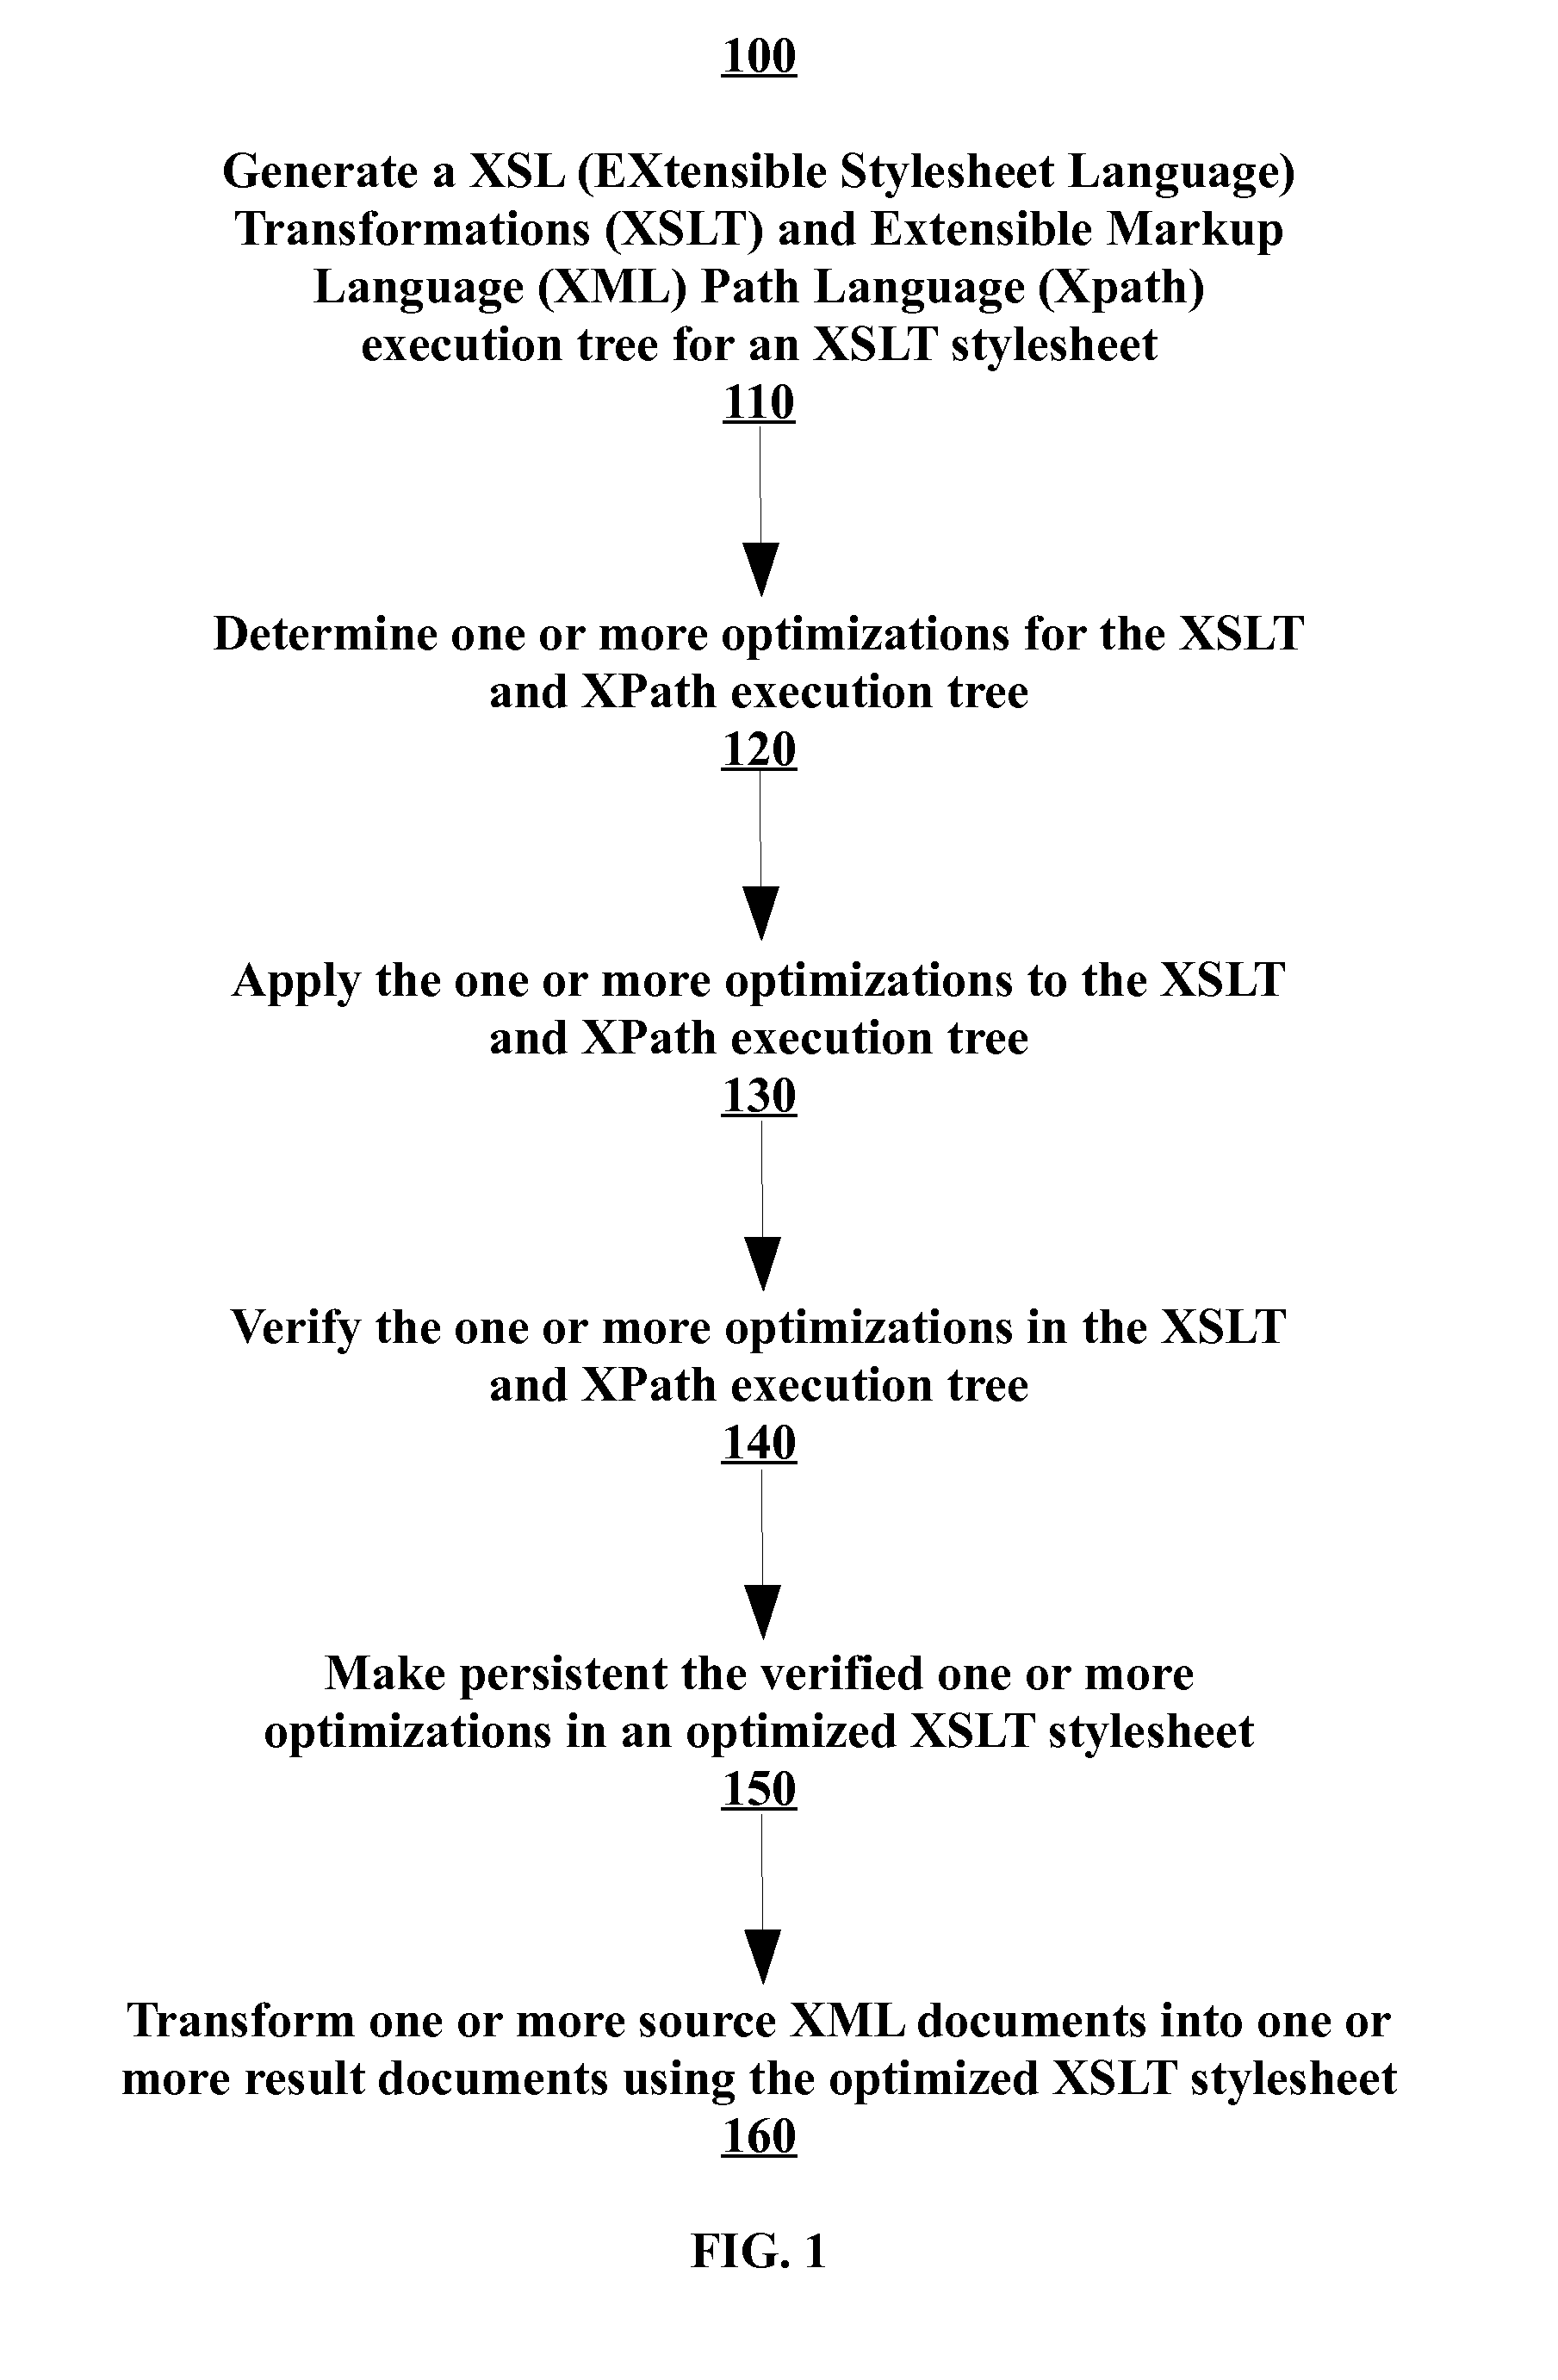 Profile-based optimization of xslt transformations